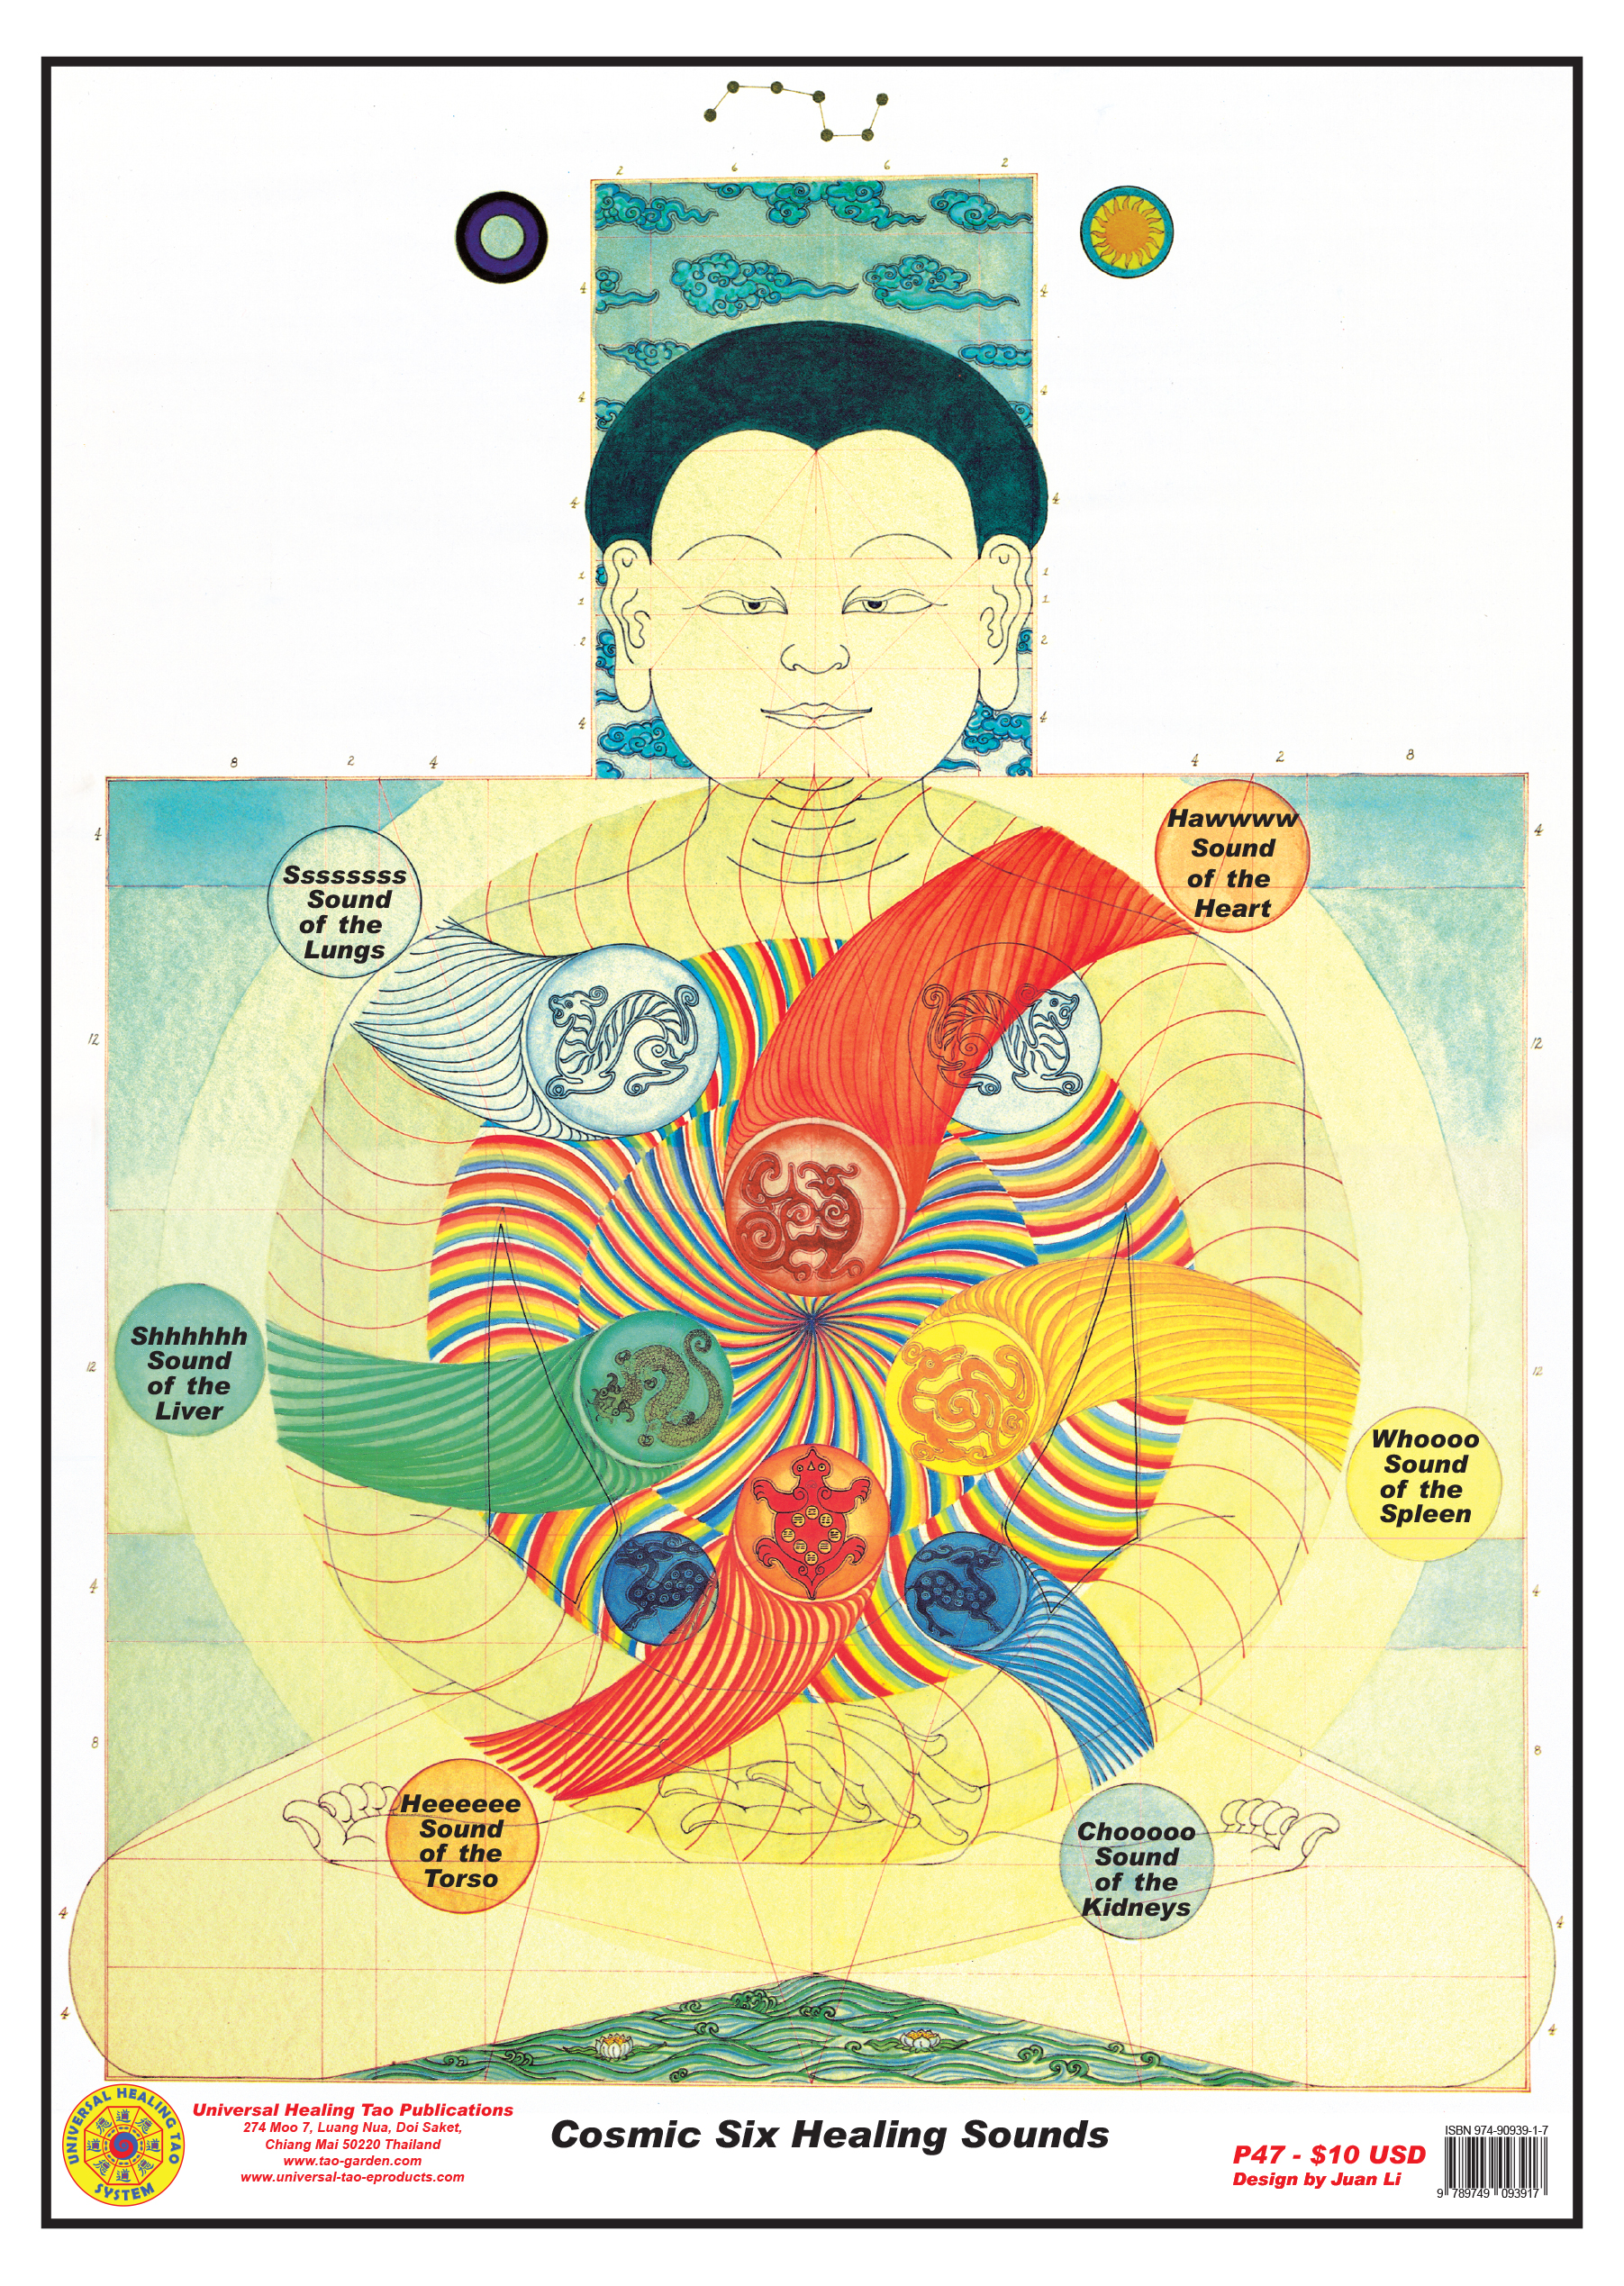 Juan Li’s Cosmic Six Healing (E-Poster) [DL-P47]